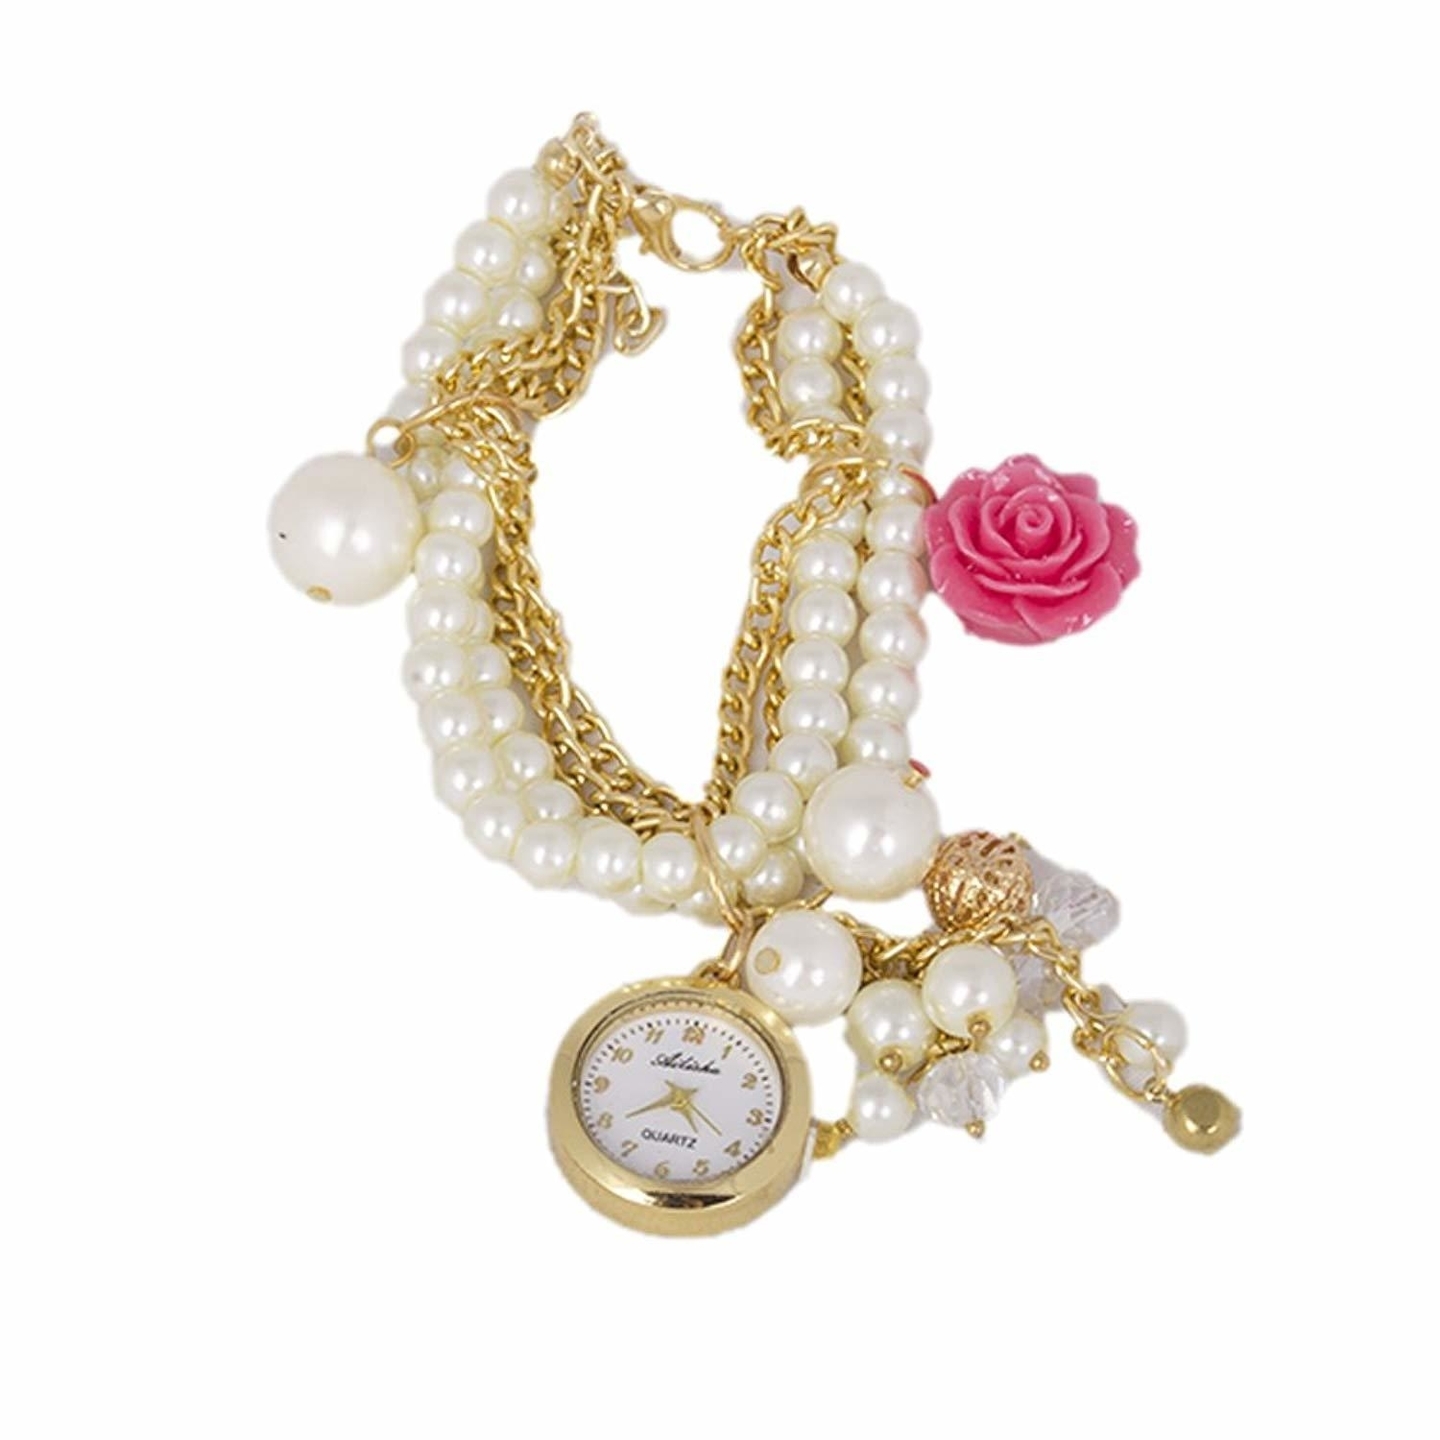 Ashiana stylish multi layer charm pearl bracelet style watch with pink rose